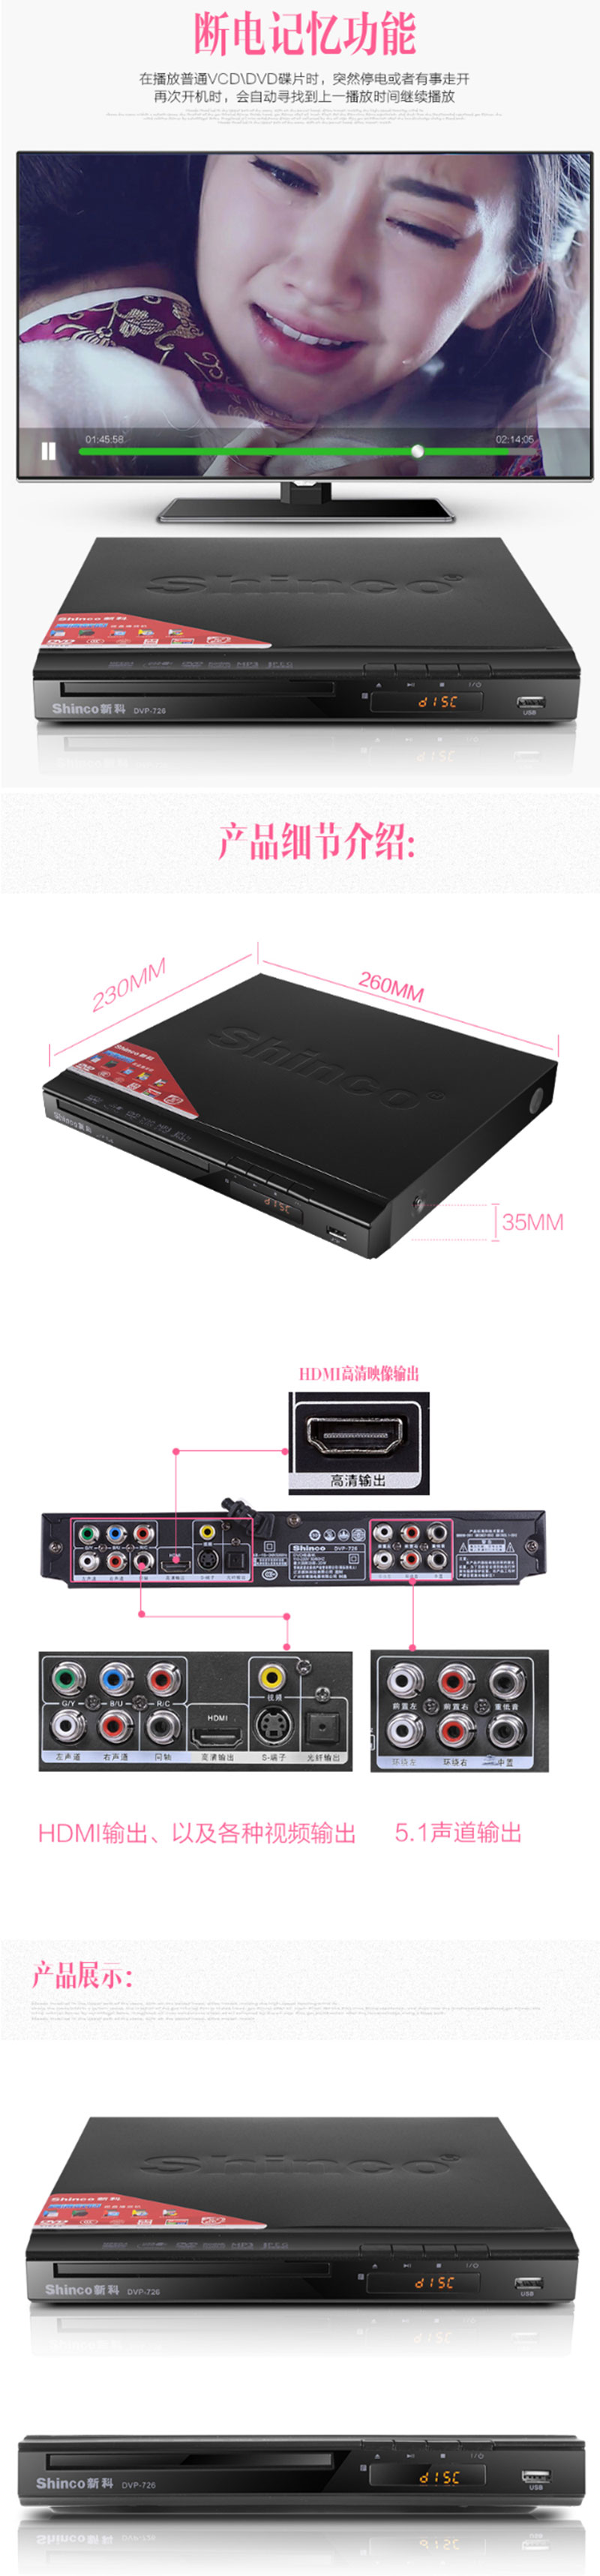 新科（Shinco）XK-101 VCD 播放机影碟机